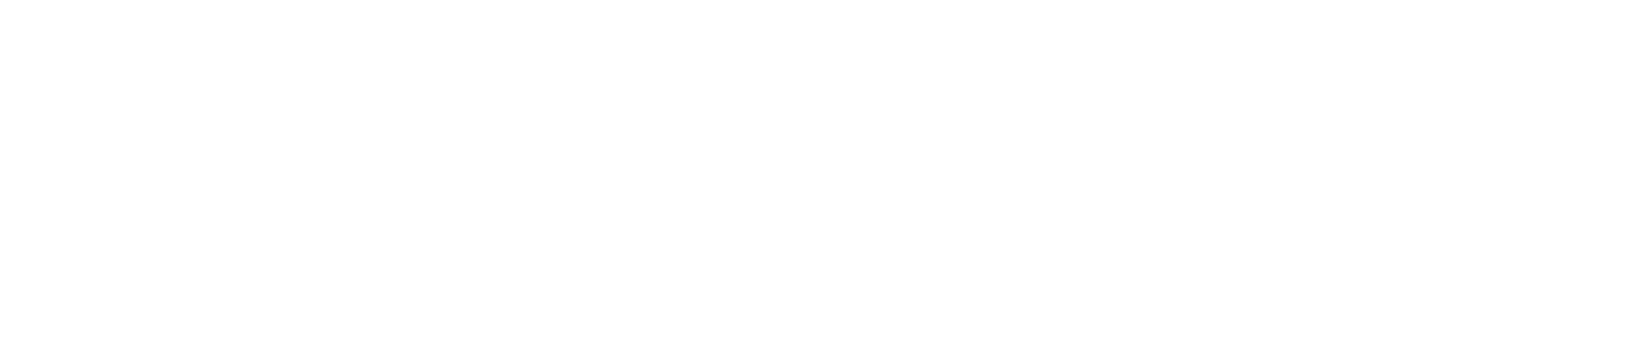 Teledyne Logo groß für dunkle Hintergründe (transparentes PNG)